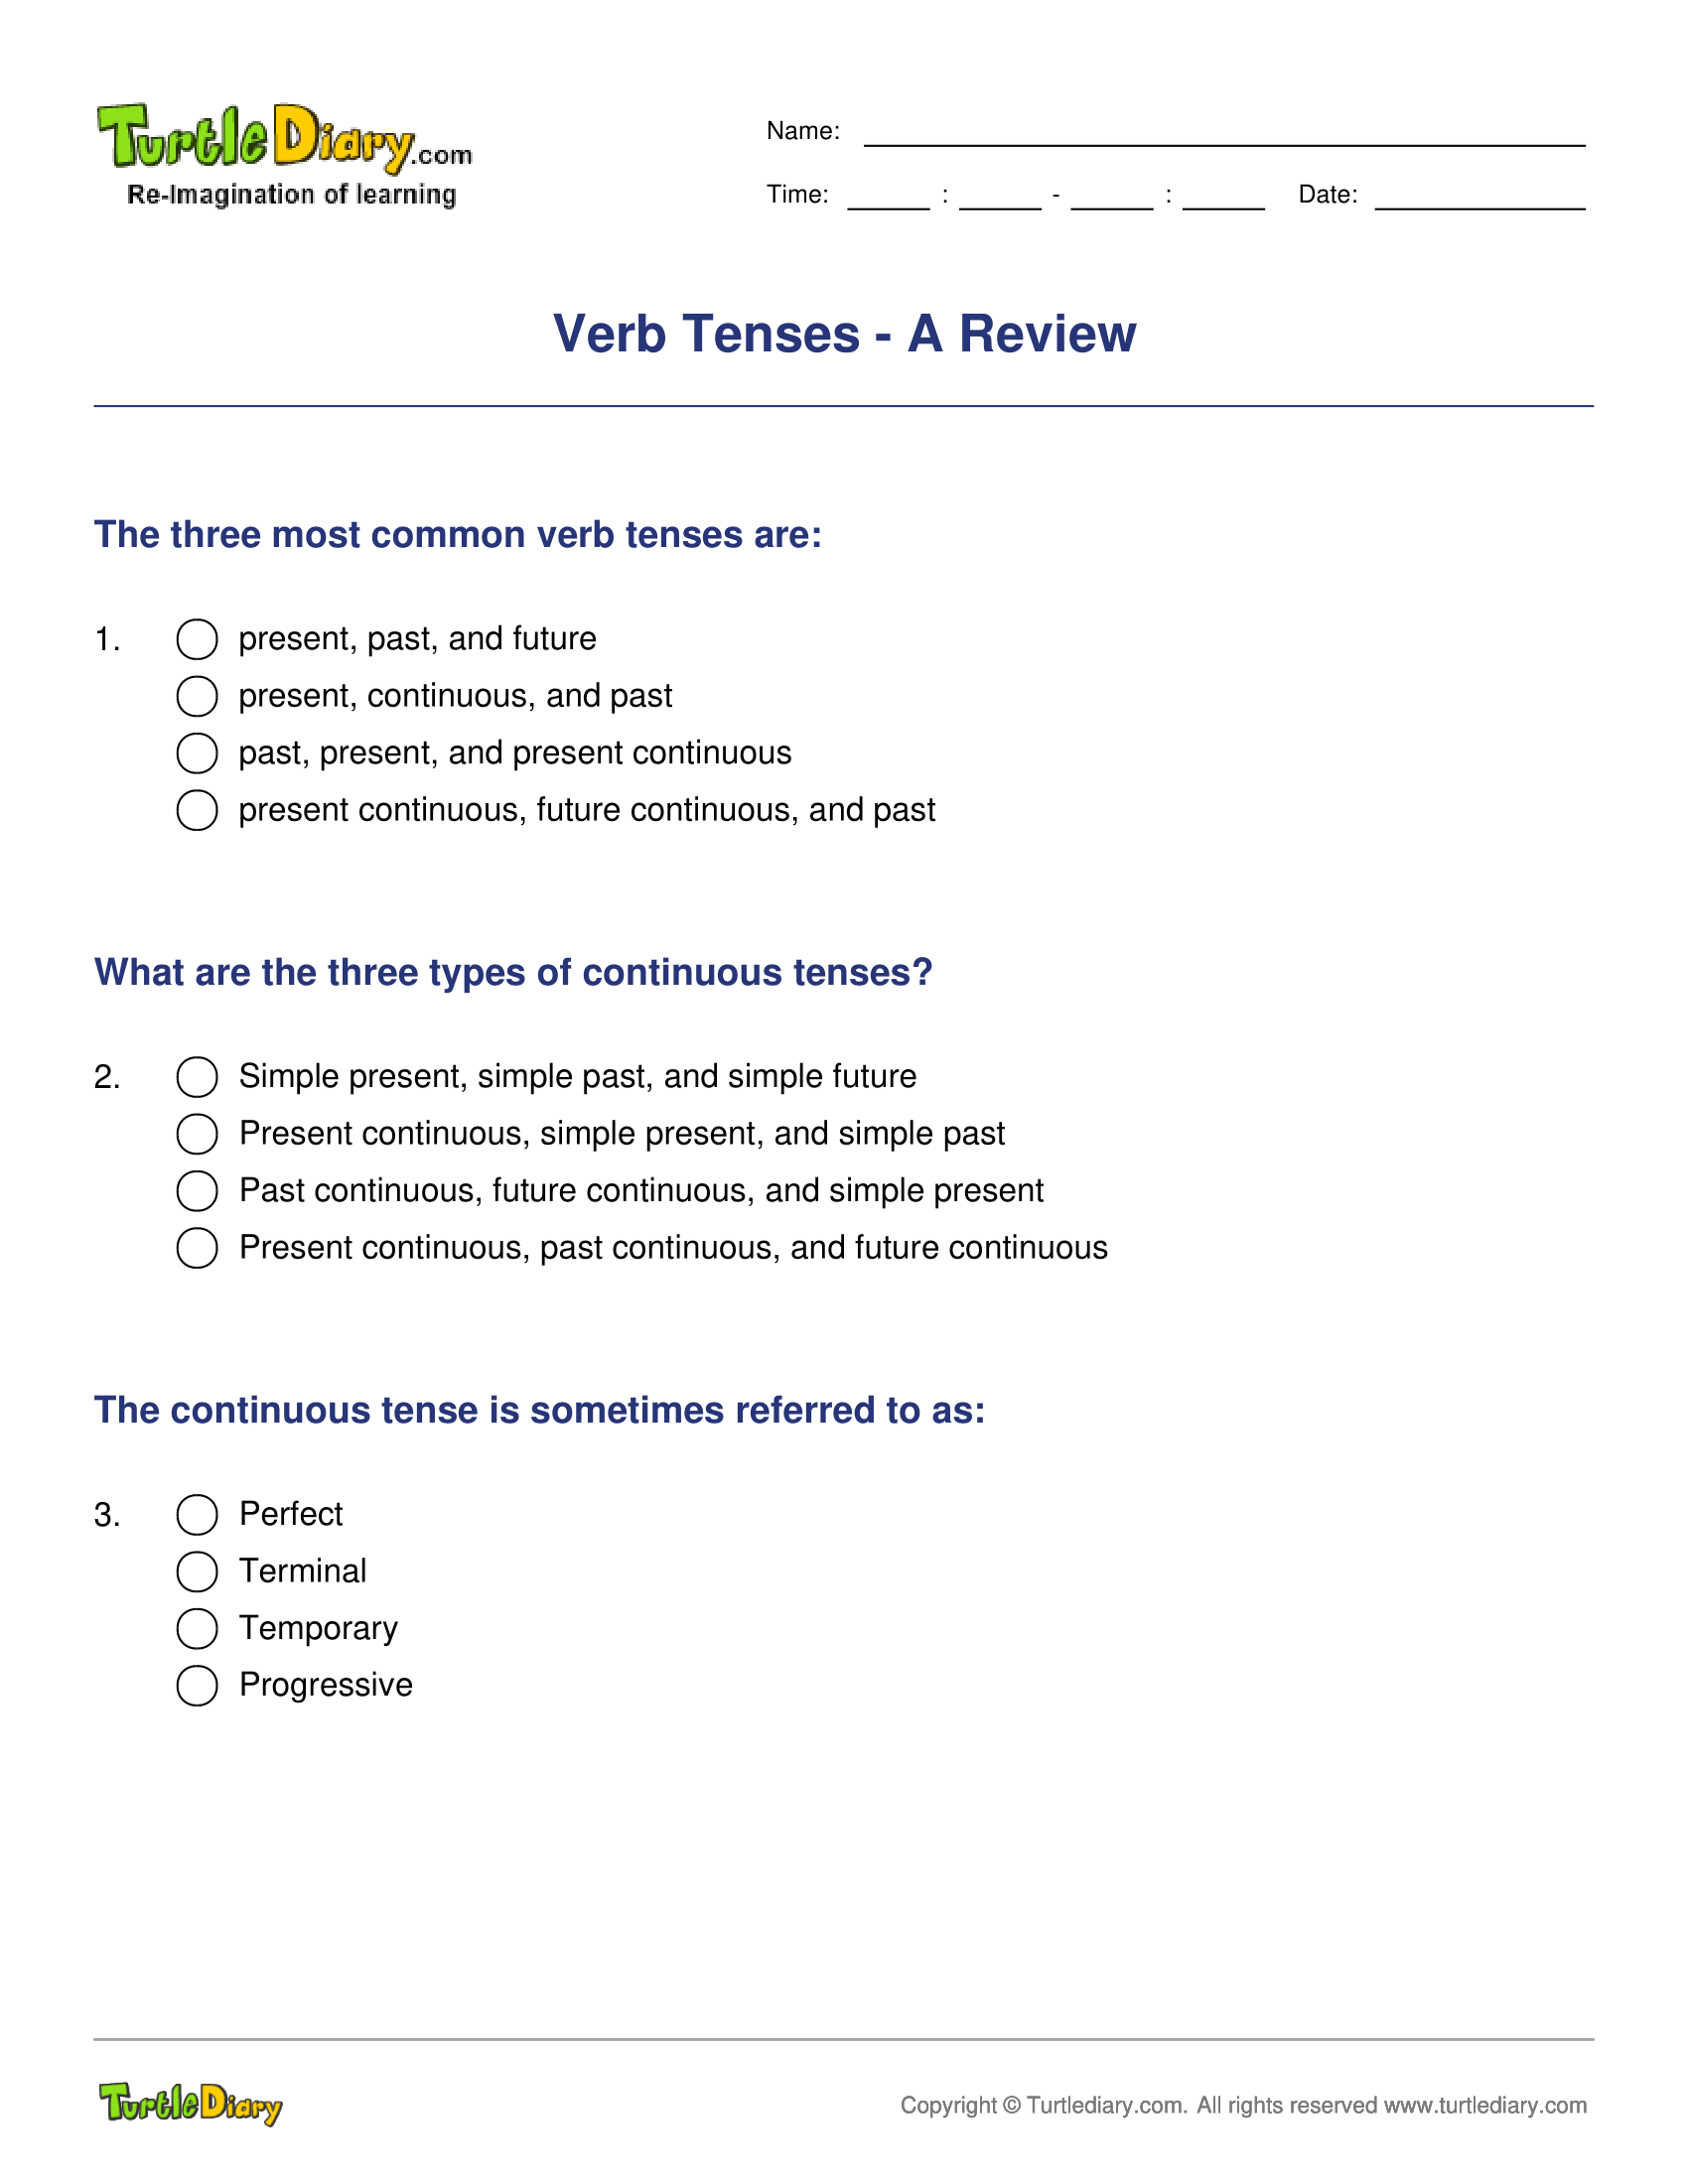 Verb Tenses - A Review